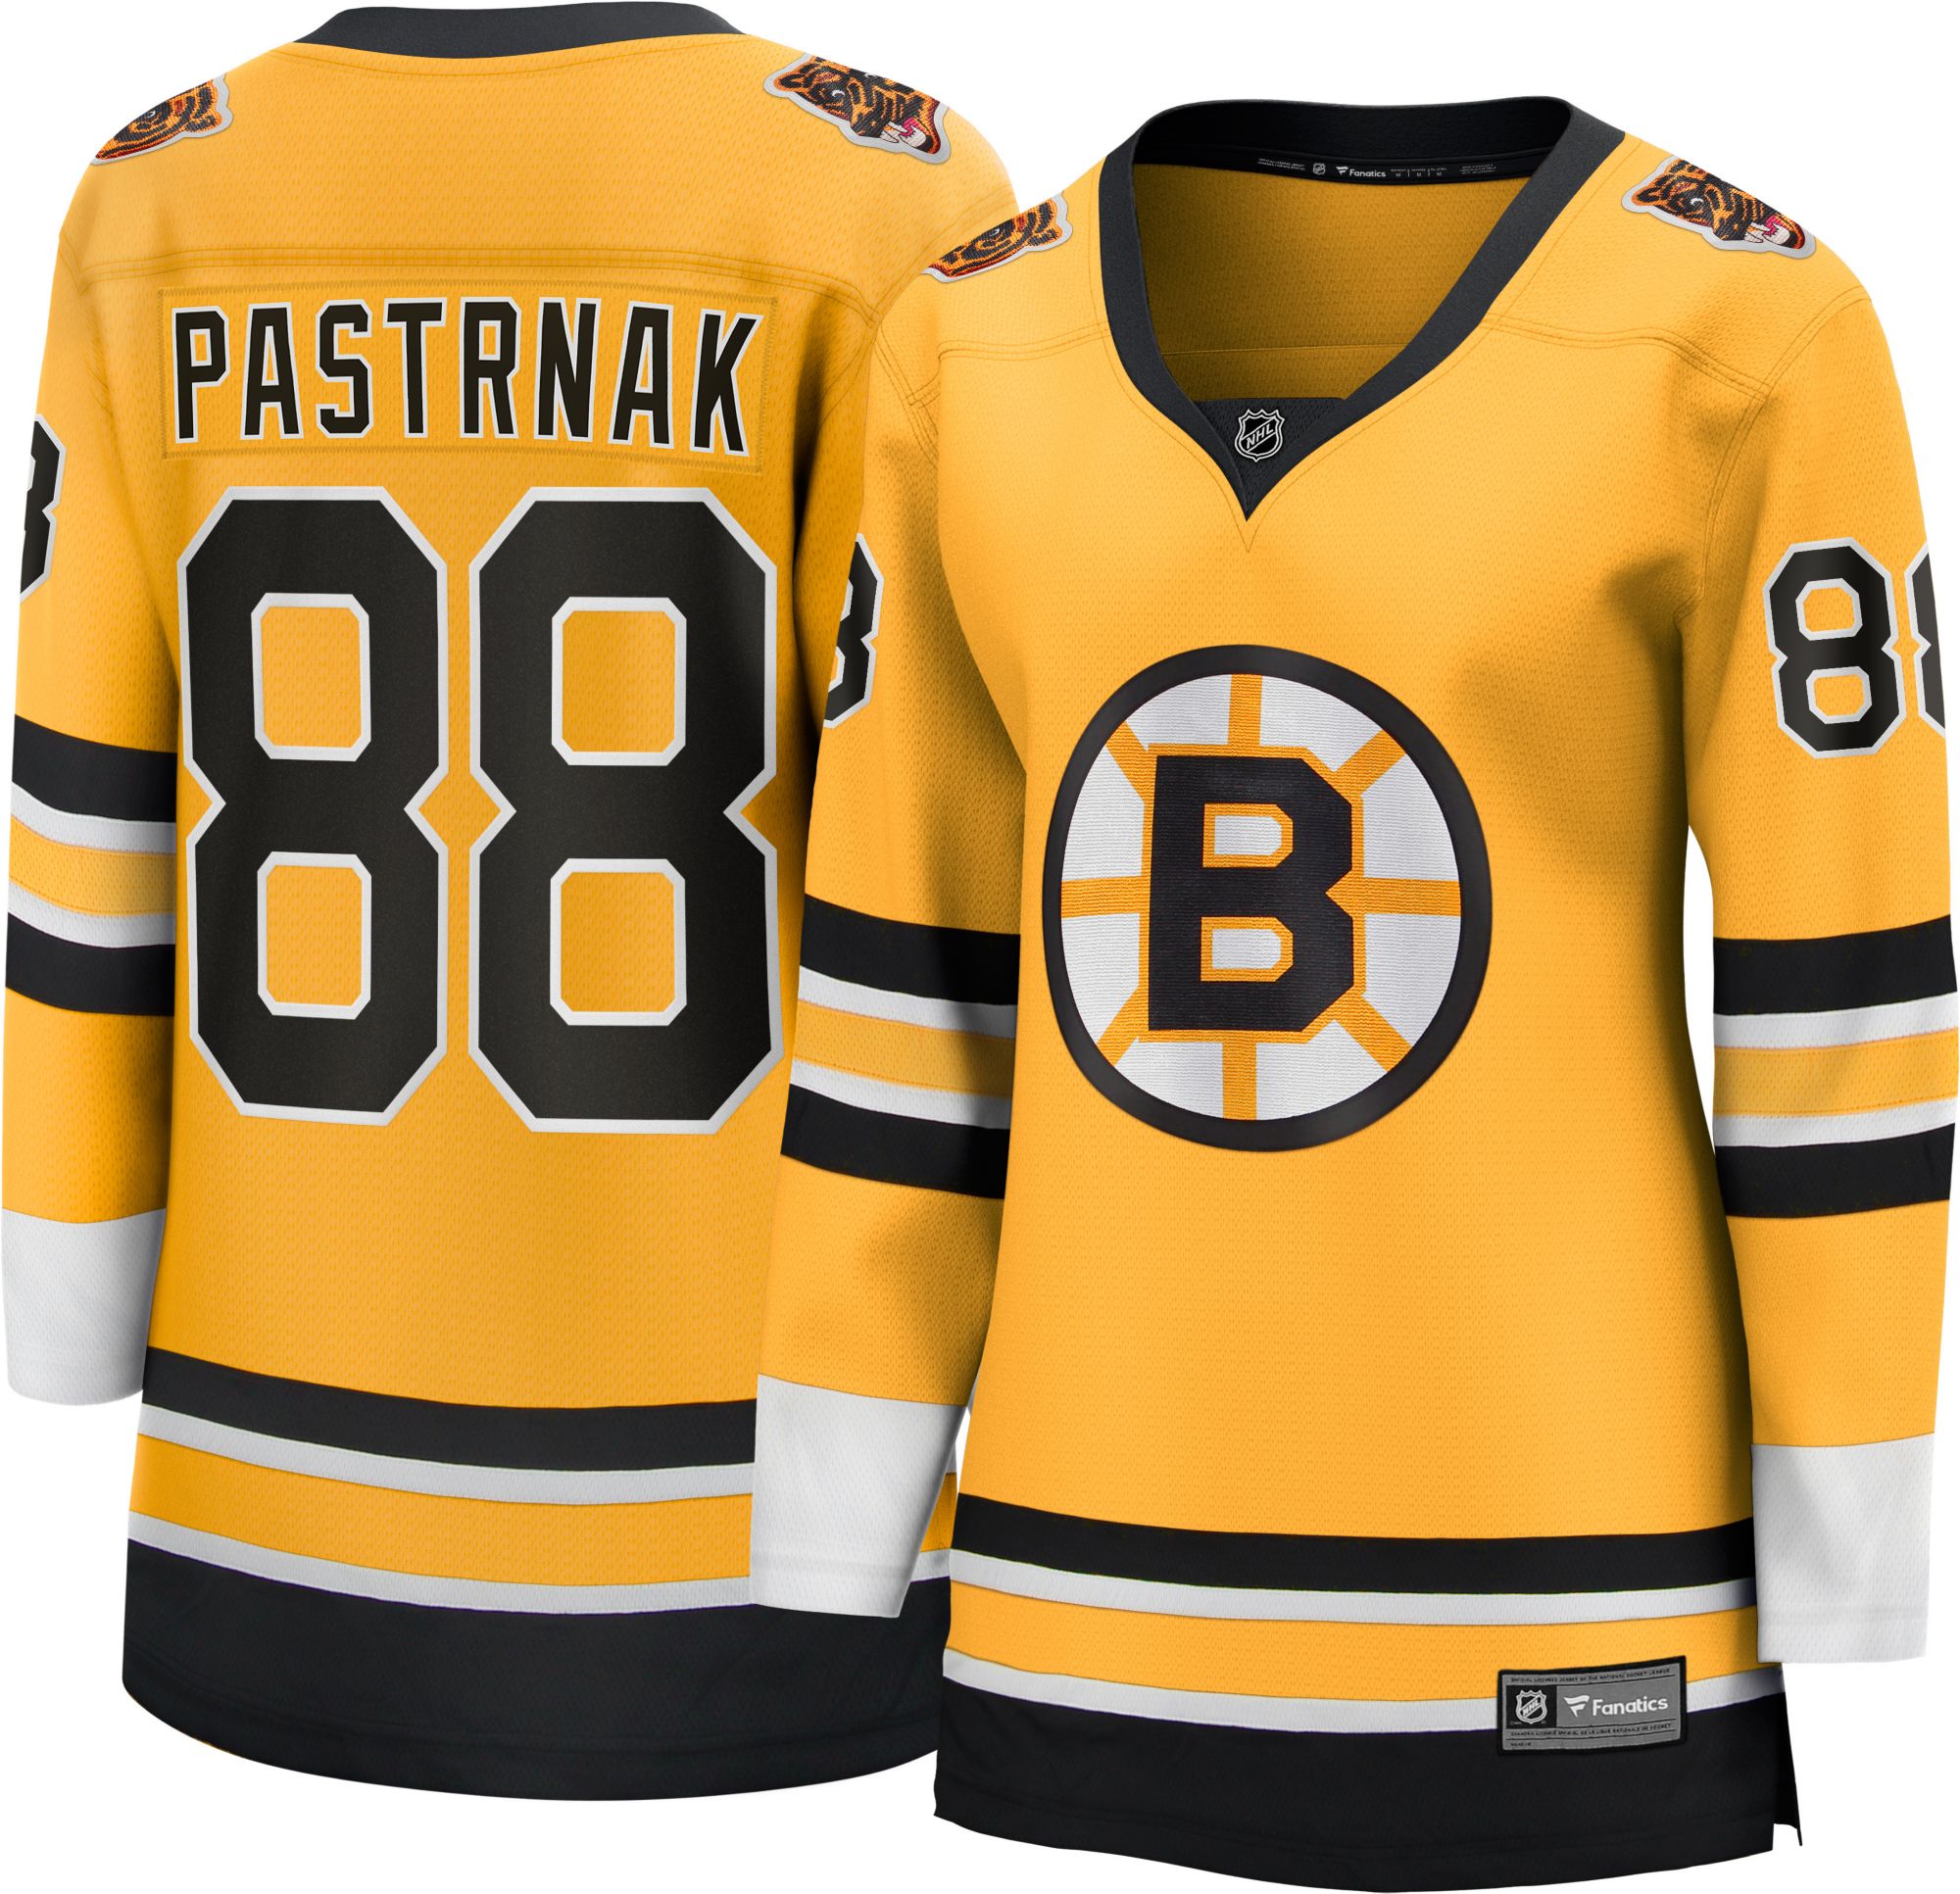 Men's Fanatics Branded Gold Boston Bruins Authentic Pro Pullover Hoodie